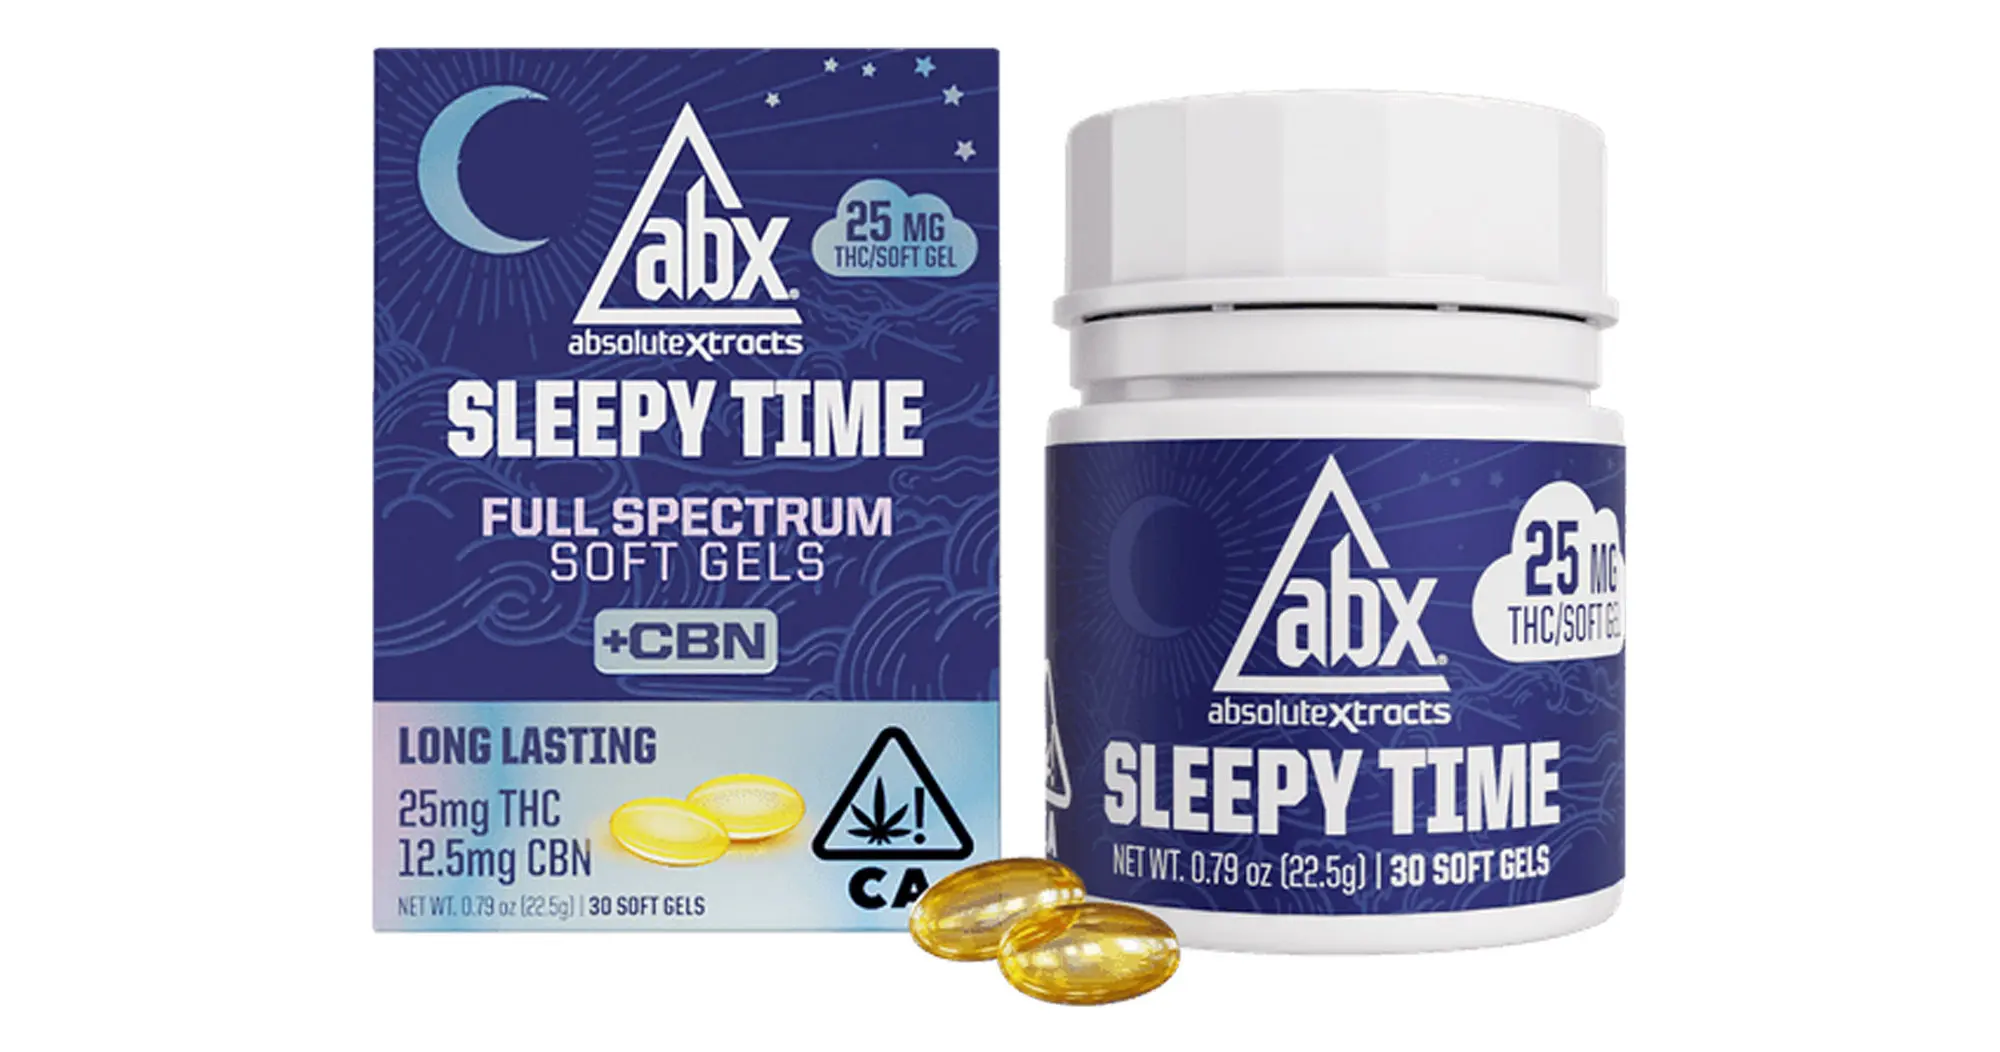 25mg Sleepy Time Solventless + CBN Soft Gels